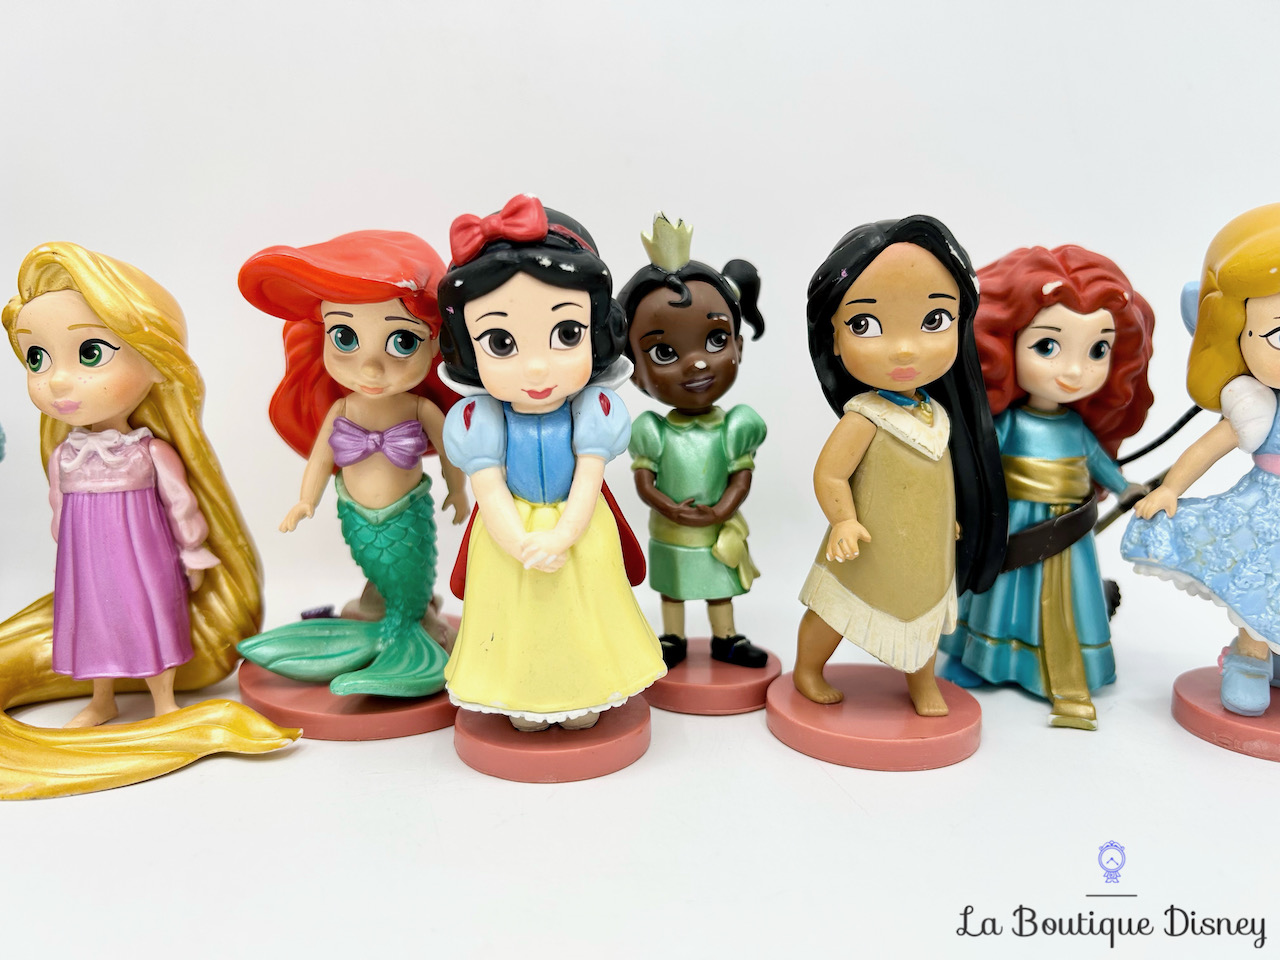 Coffret Animators de luxe collection princesse Disney Animator 11